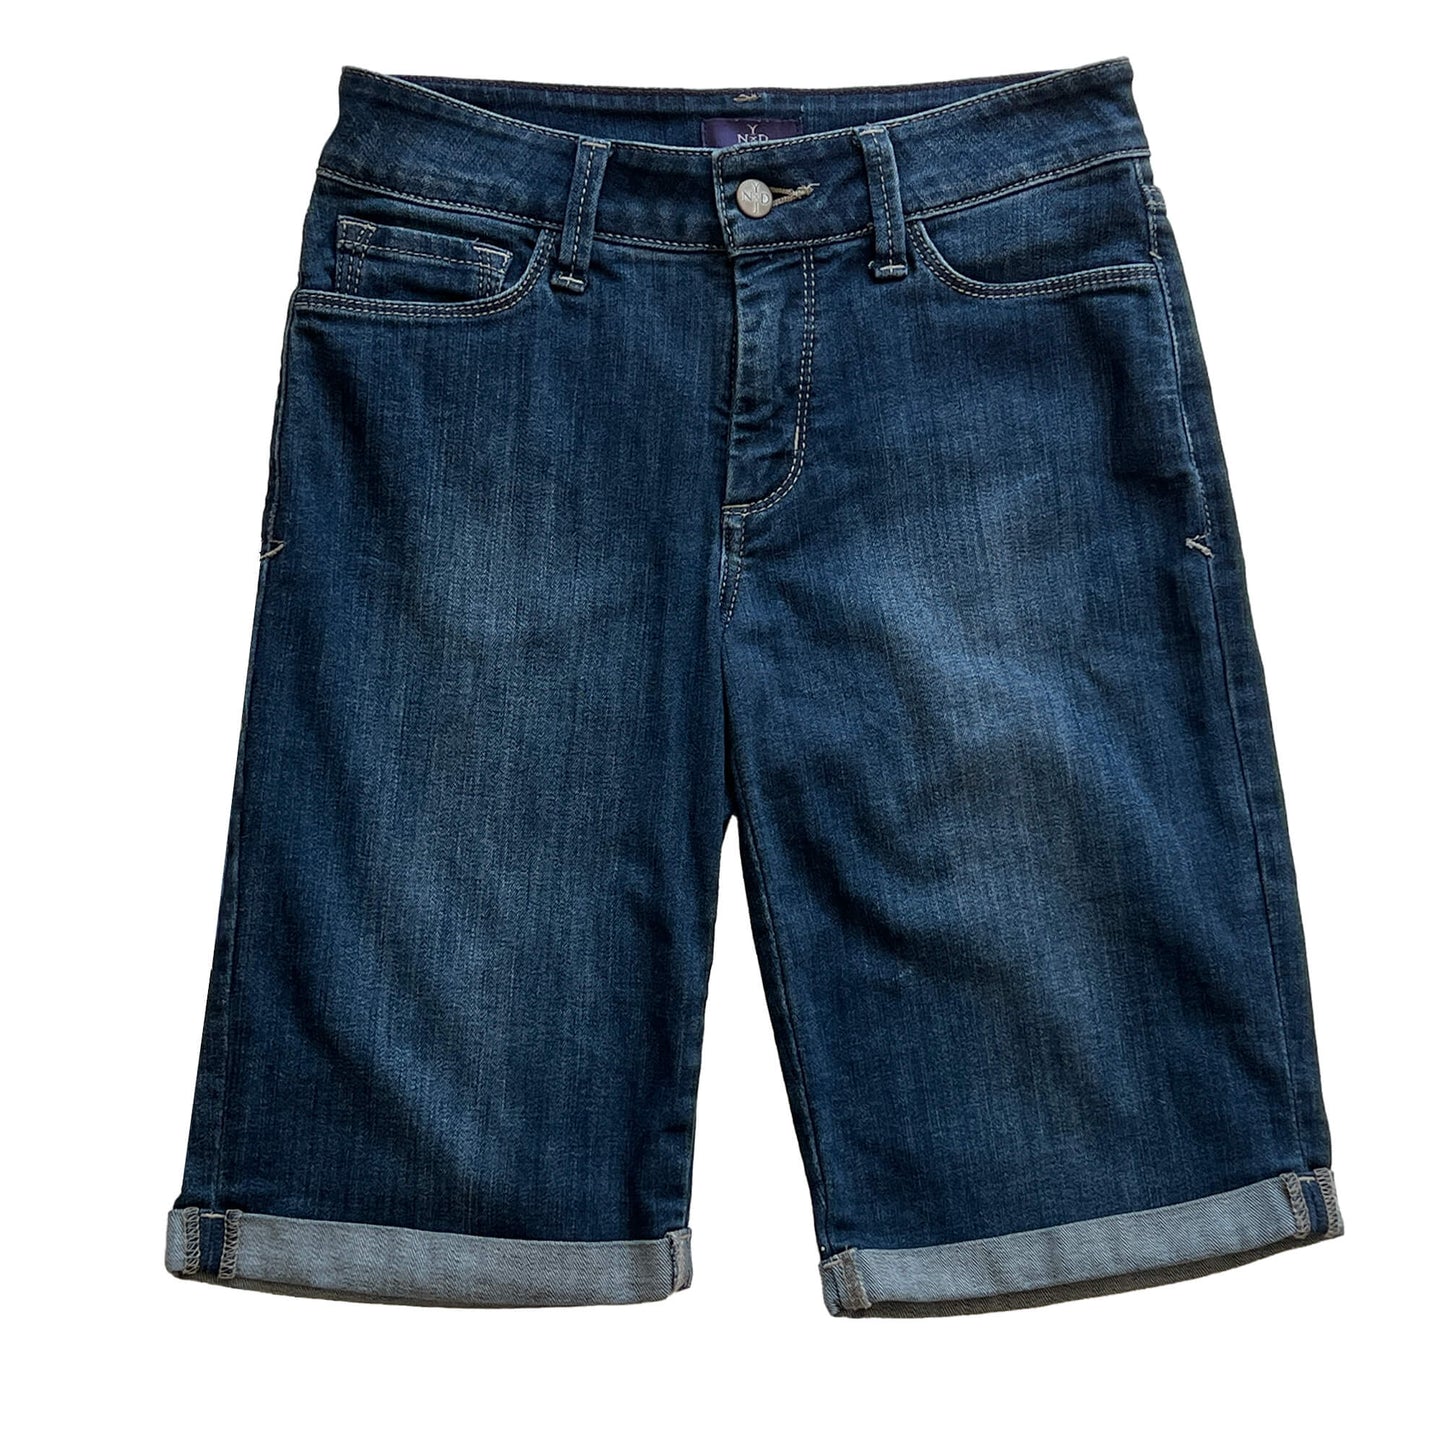 New NYDJ 11-inch Blue Denim Shorts - Size 0 - Lift Tuck Technology